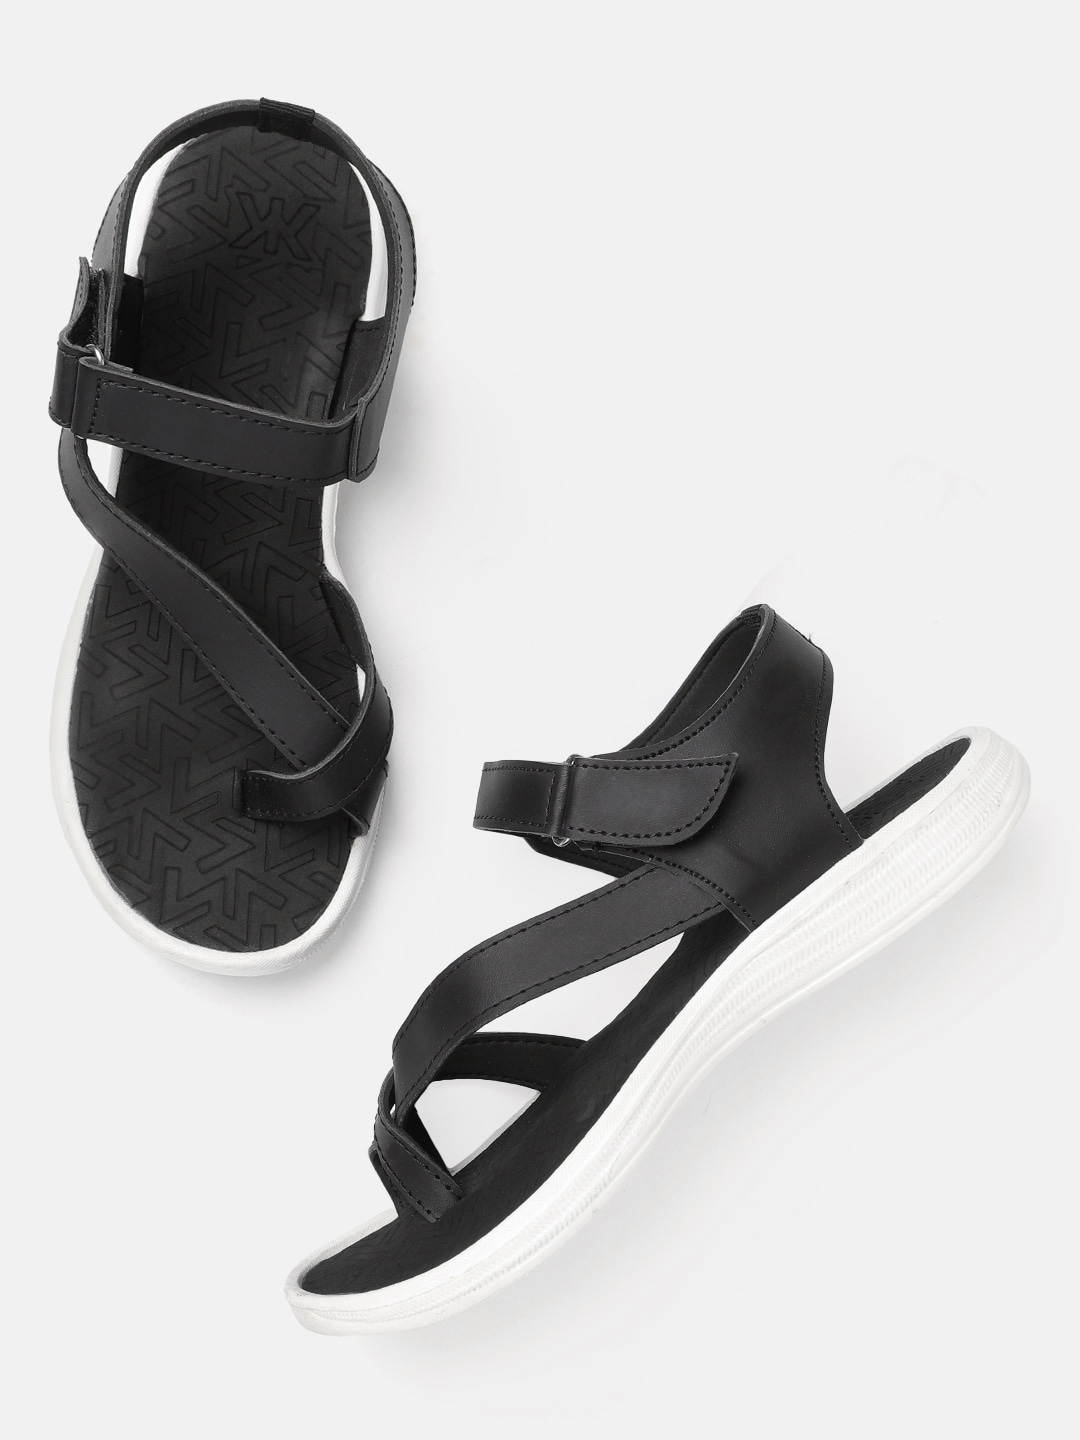 Kook N Keech Women Black Solid Leather Comfort Sandals Price in India